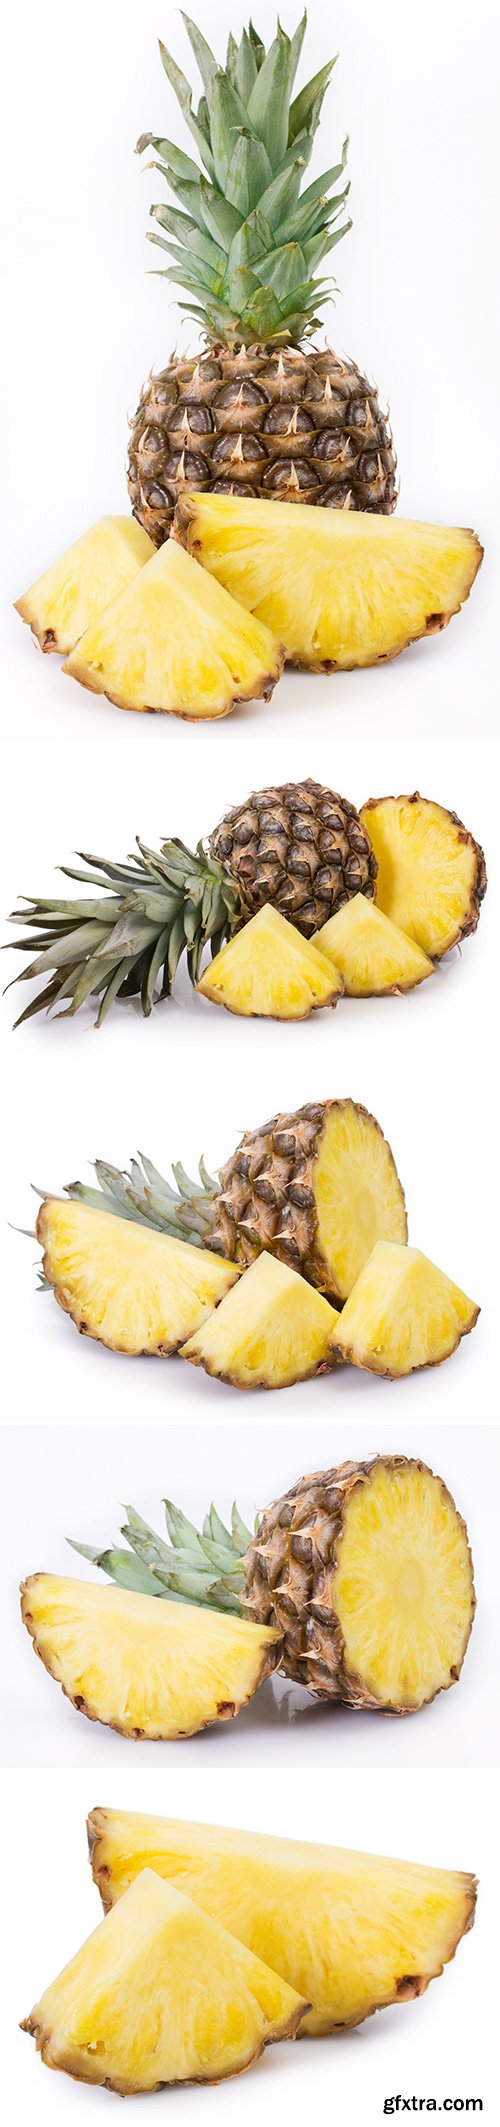 Pineapple Isolated - 10xJPGs